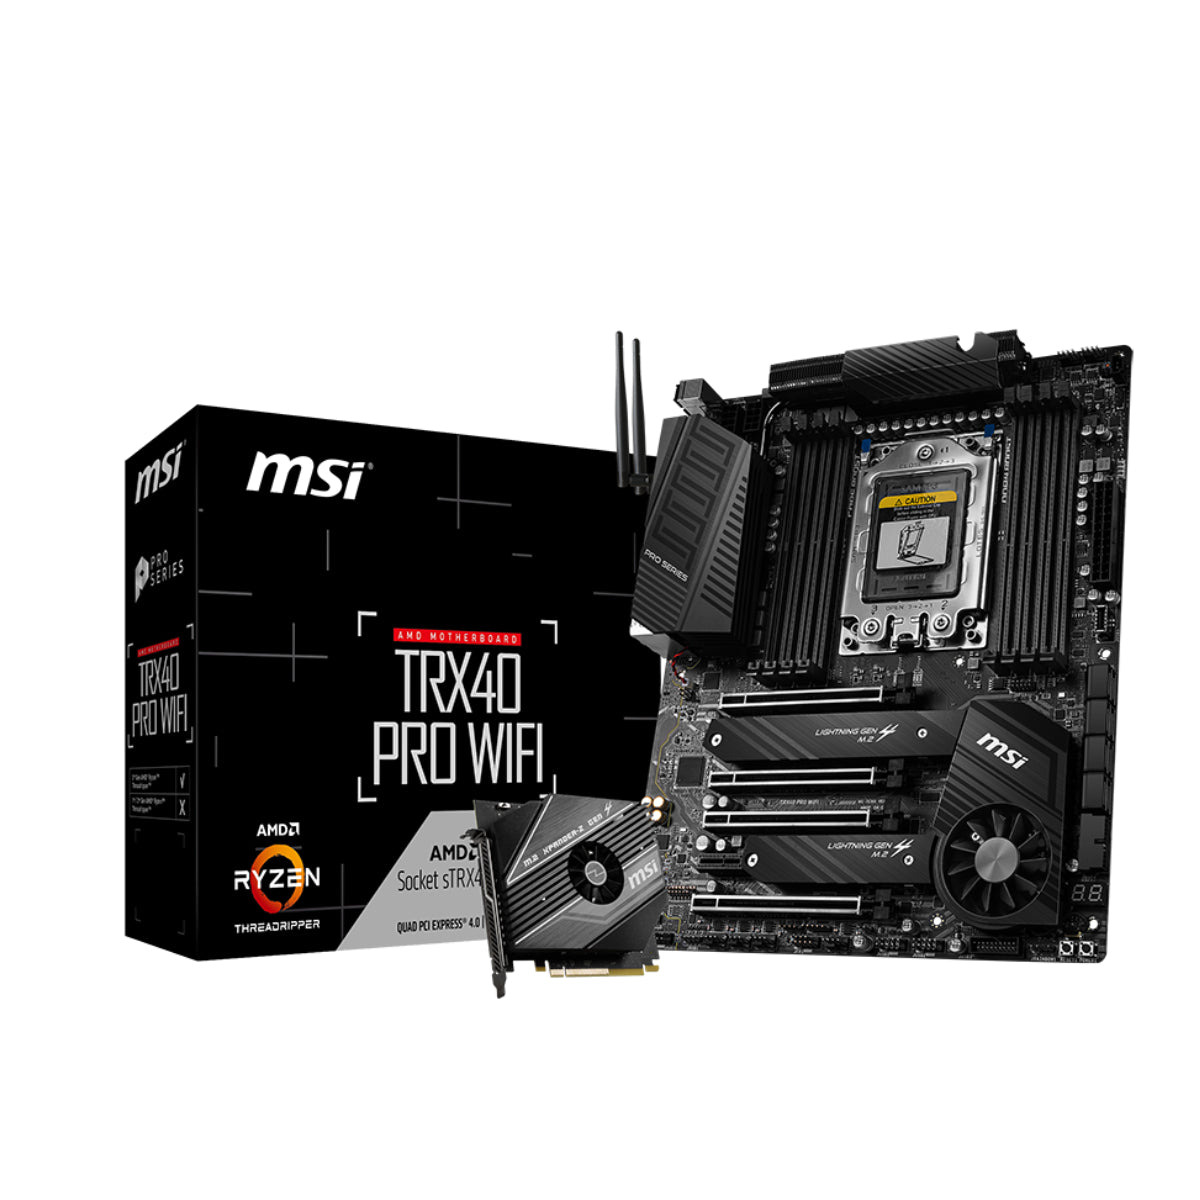 MSI TRX40 Pro WiFi - AMD E-ATX Motherboard - Store 974 | ستور ٩٧٤